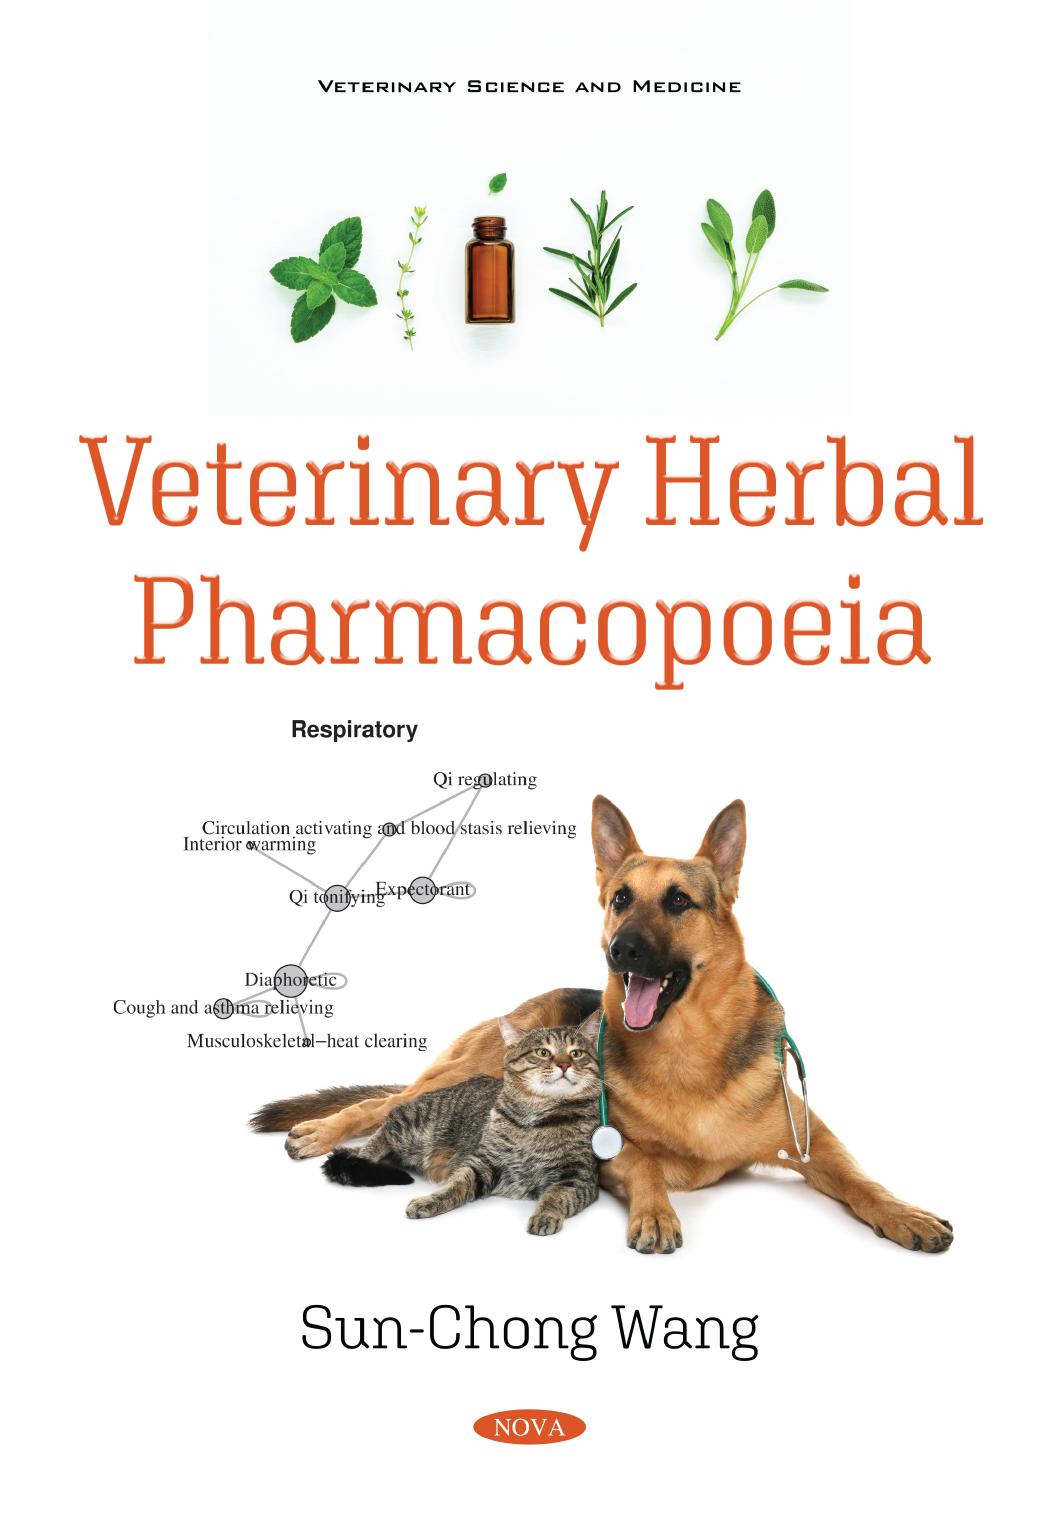 Veterinary Herbal Pharmacopoeia 2020